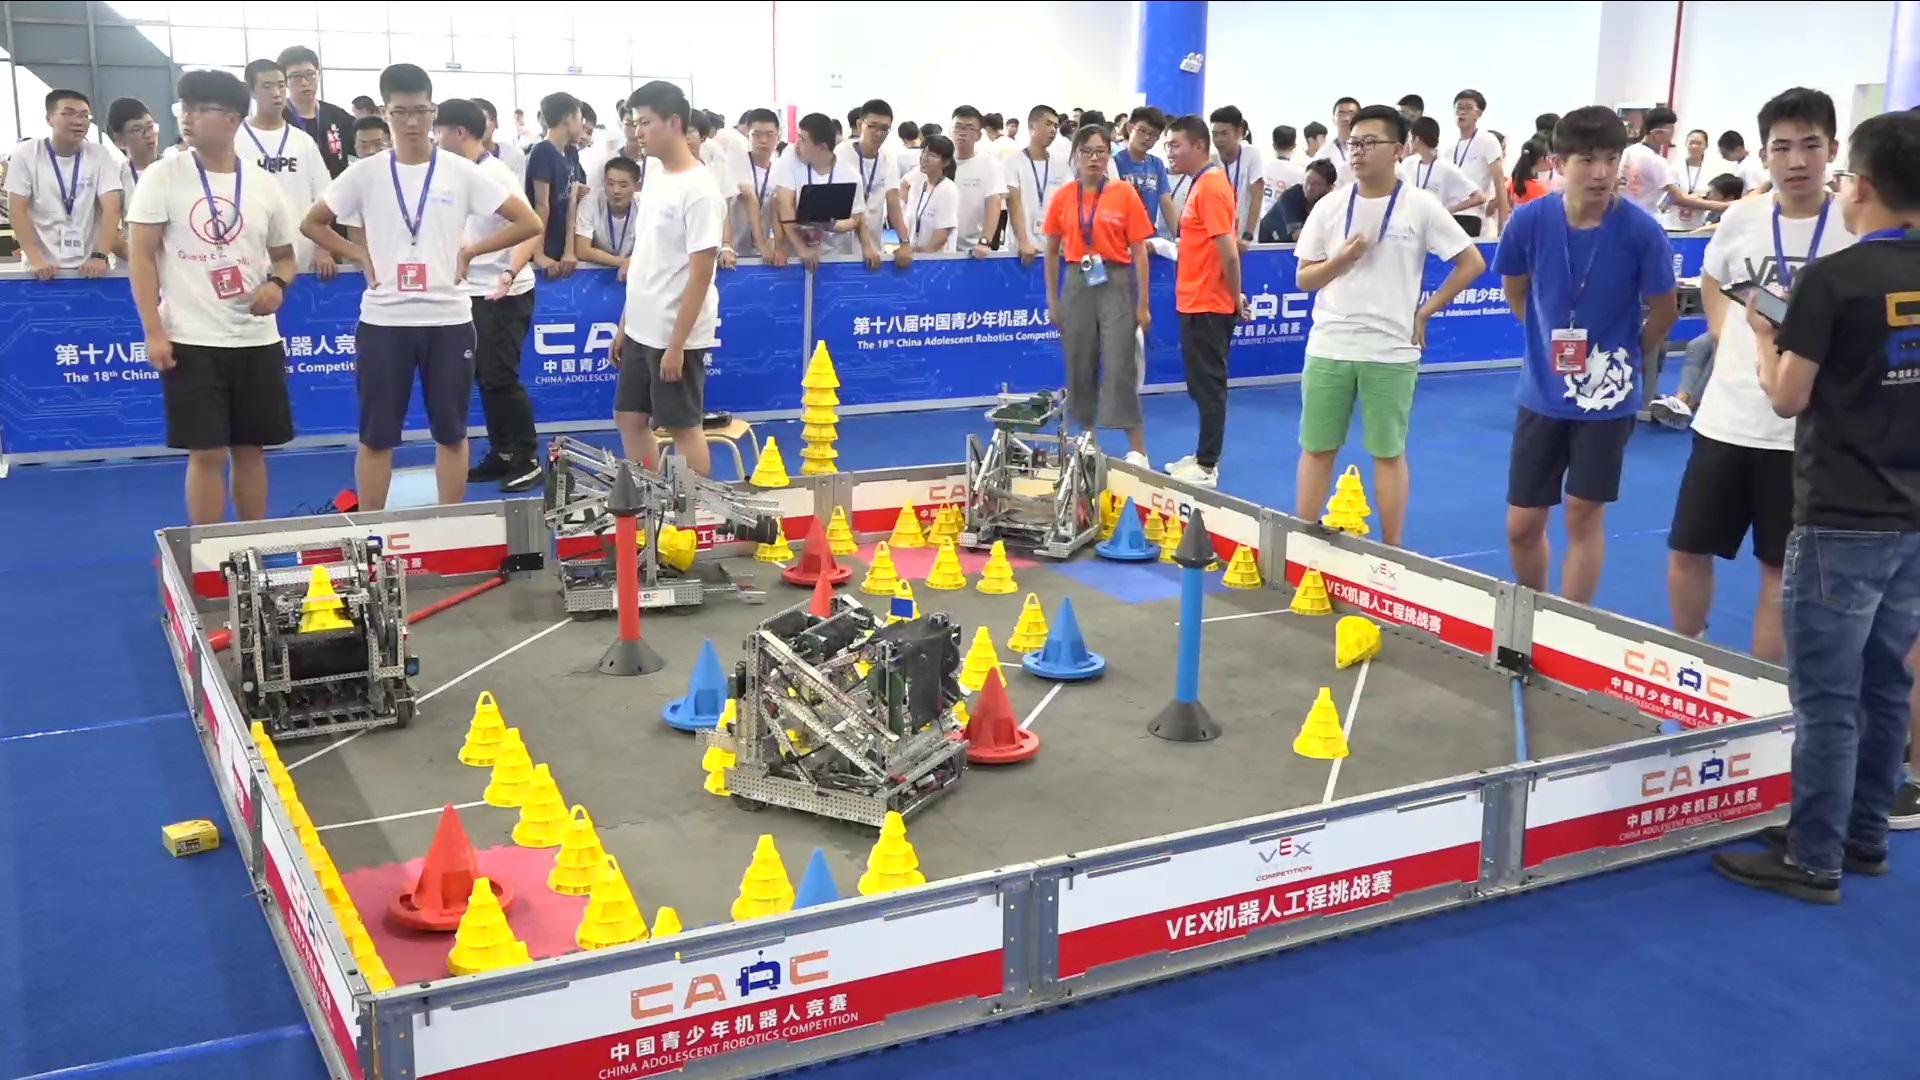 4-vex-跃上巅峰-机器人工程挑战赛现场